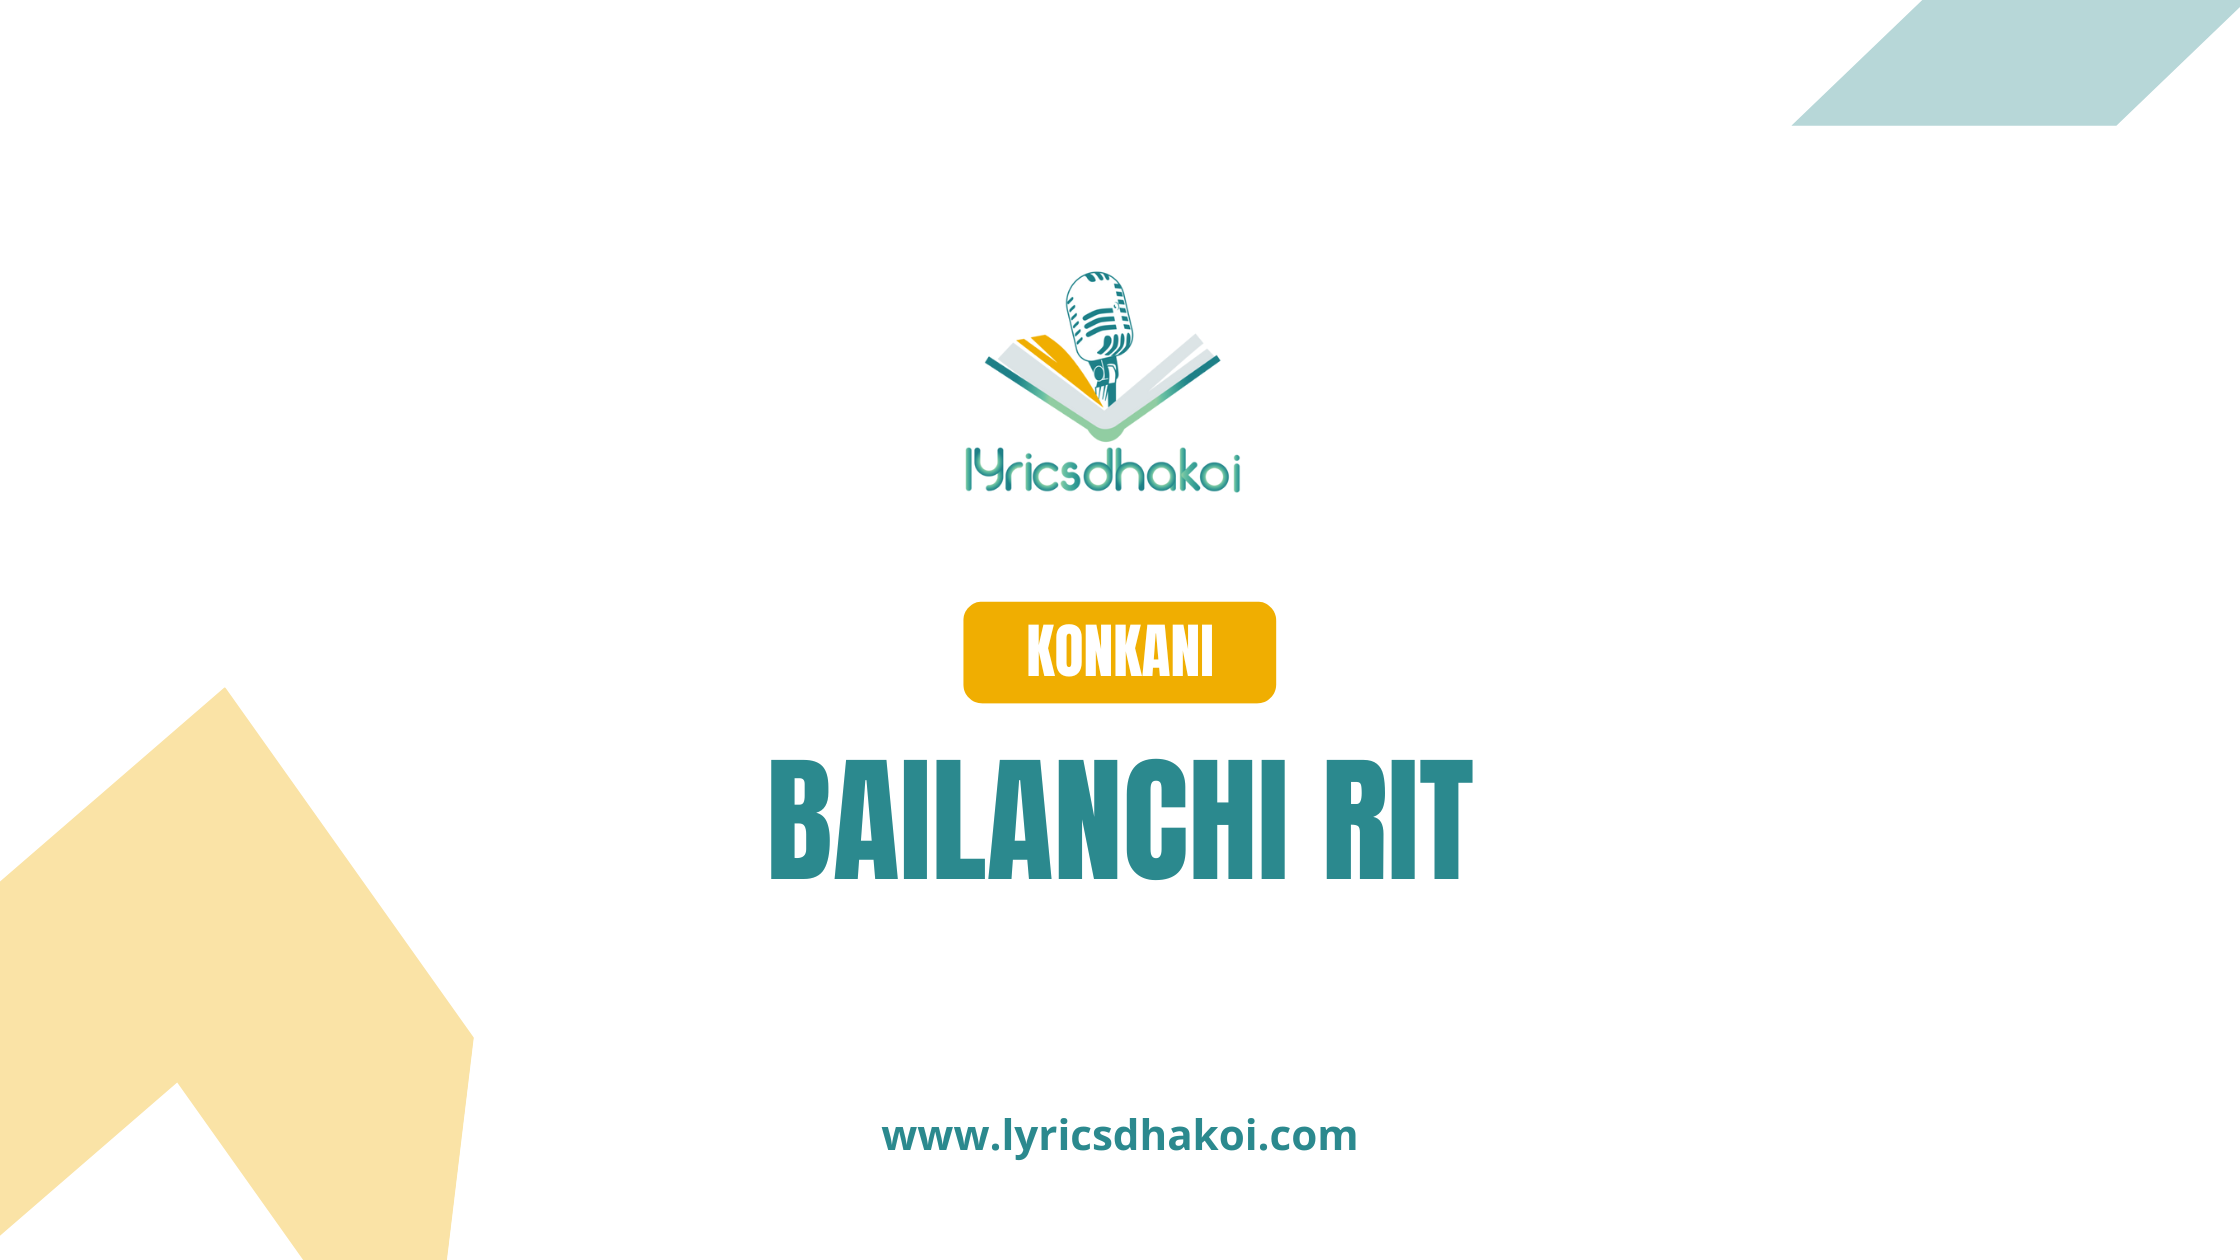 Bailanchi Rit Konkani Lyrics for Karaoke Online - LyricsDhakoi.com